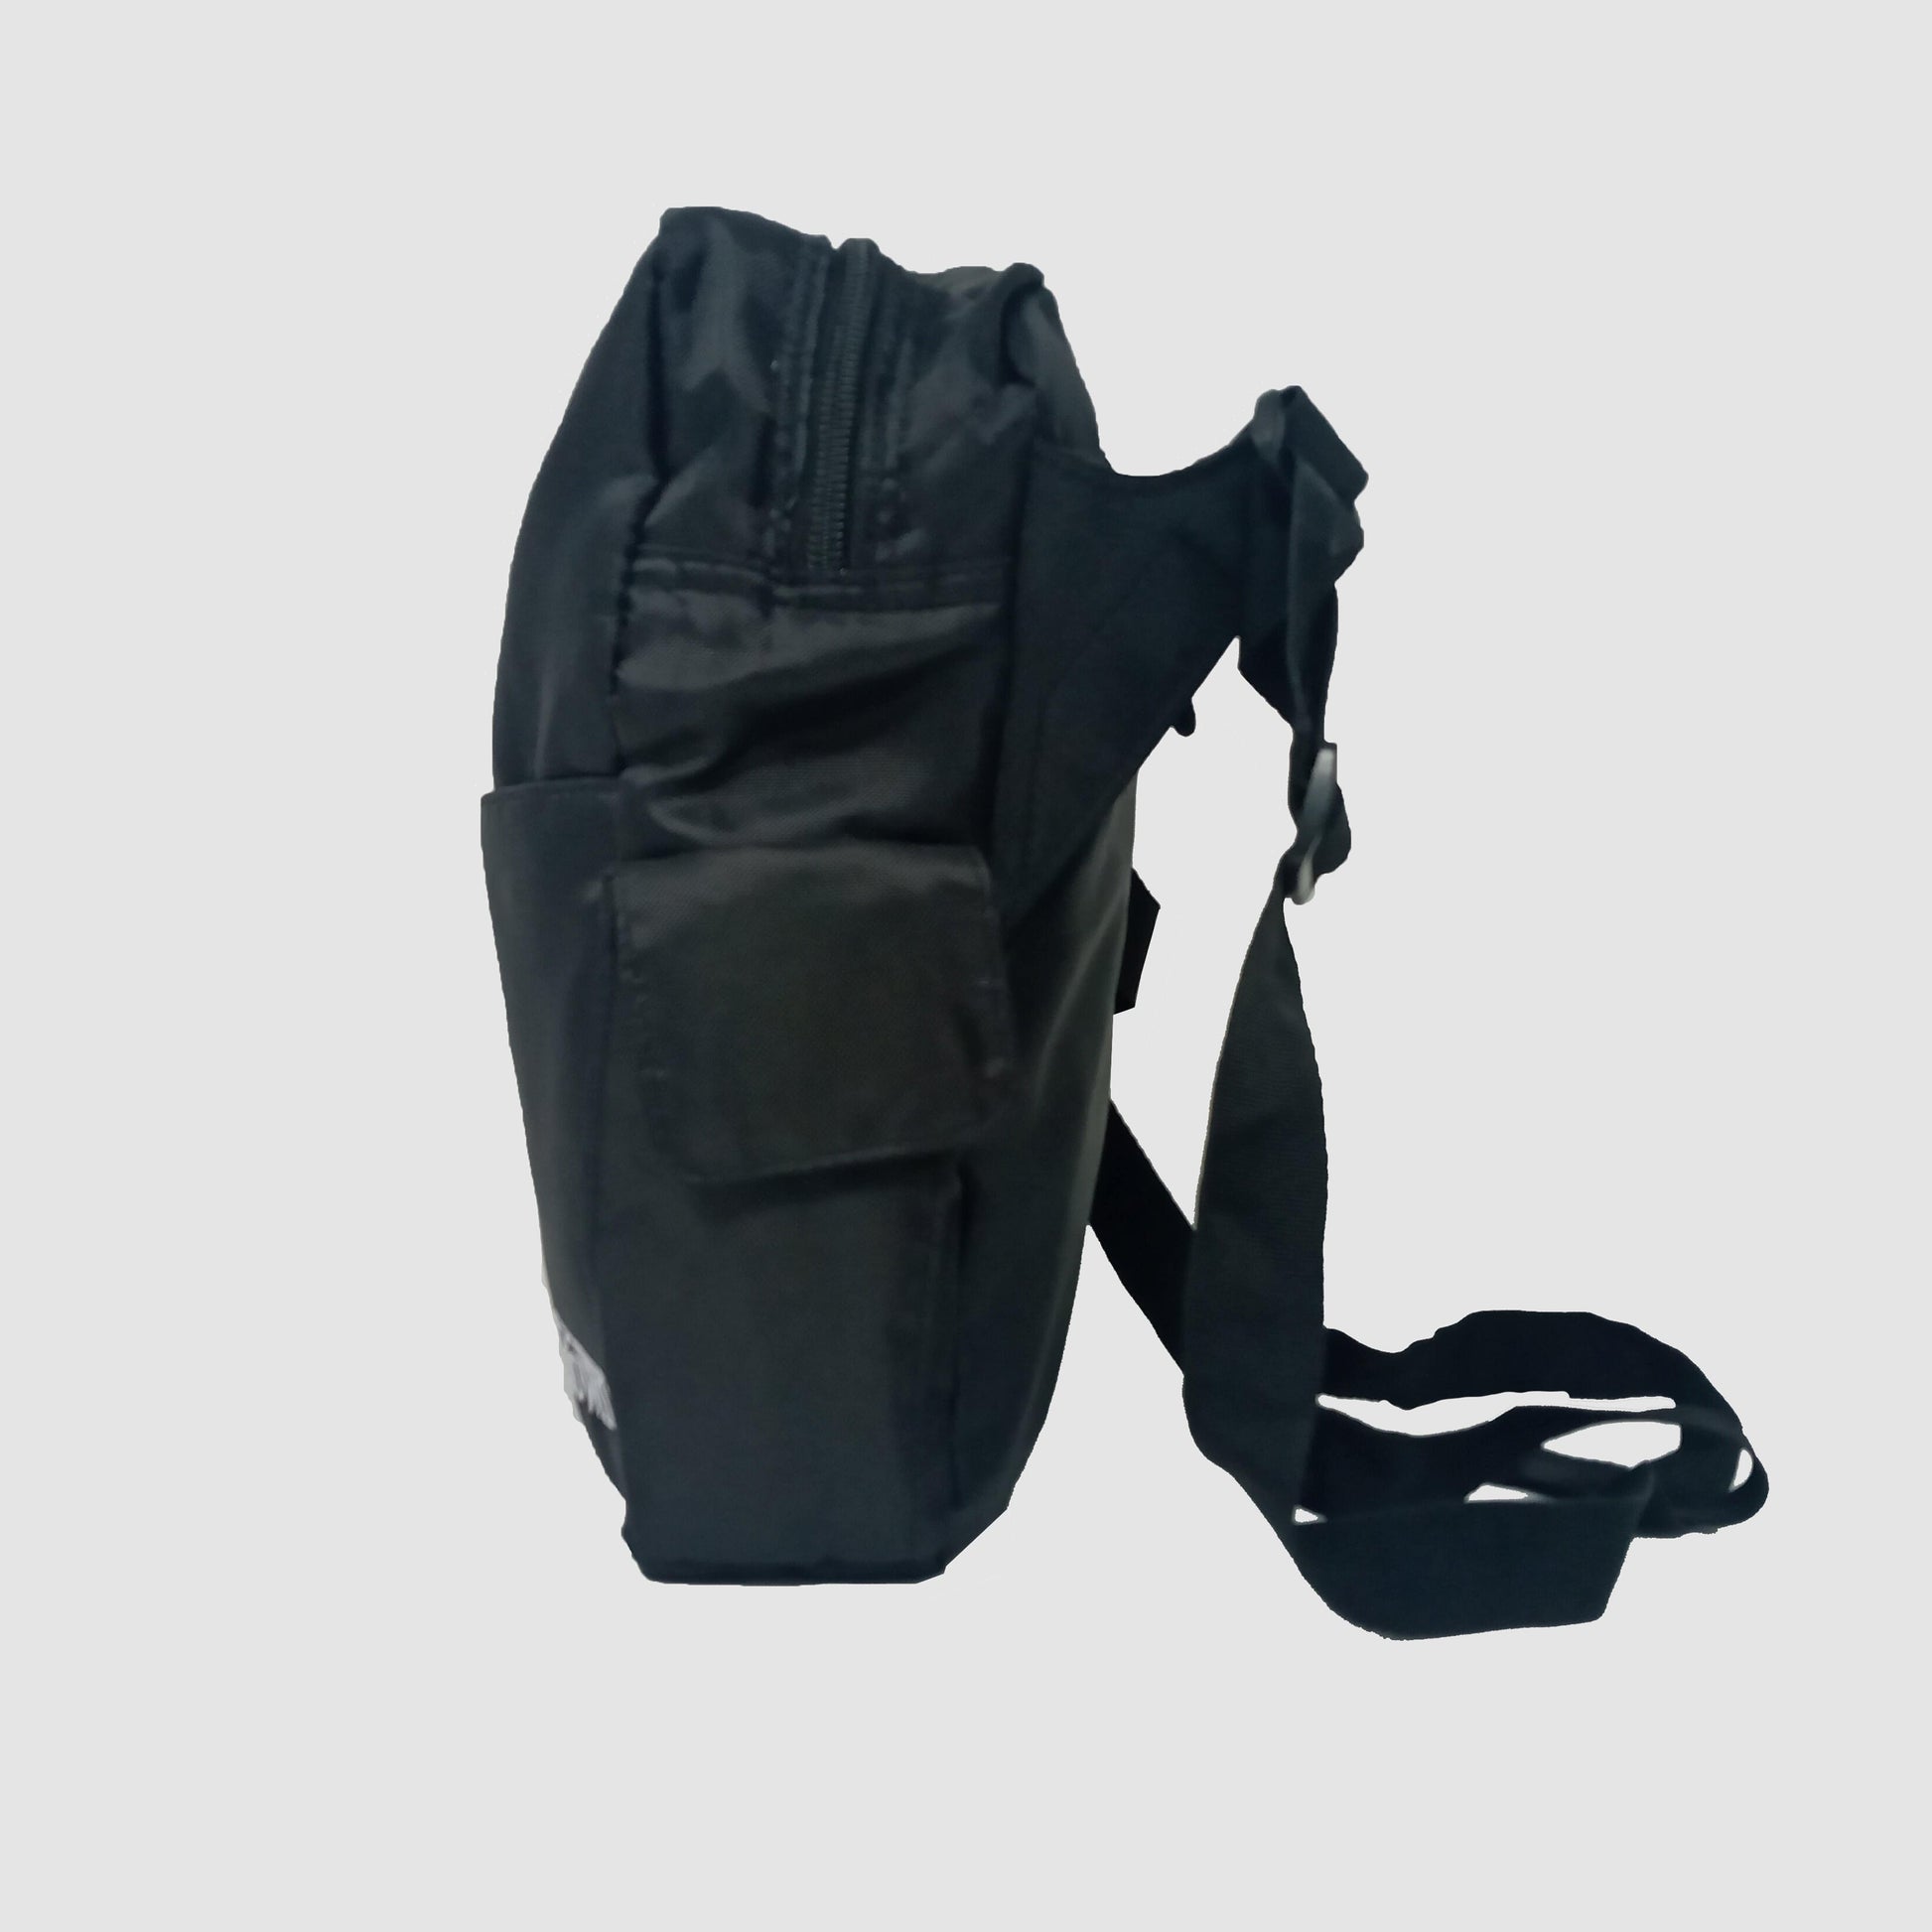 D1Brown's Backpacks & Luggage 25cm X 20cm / Black Handbag